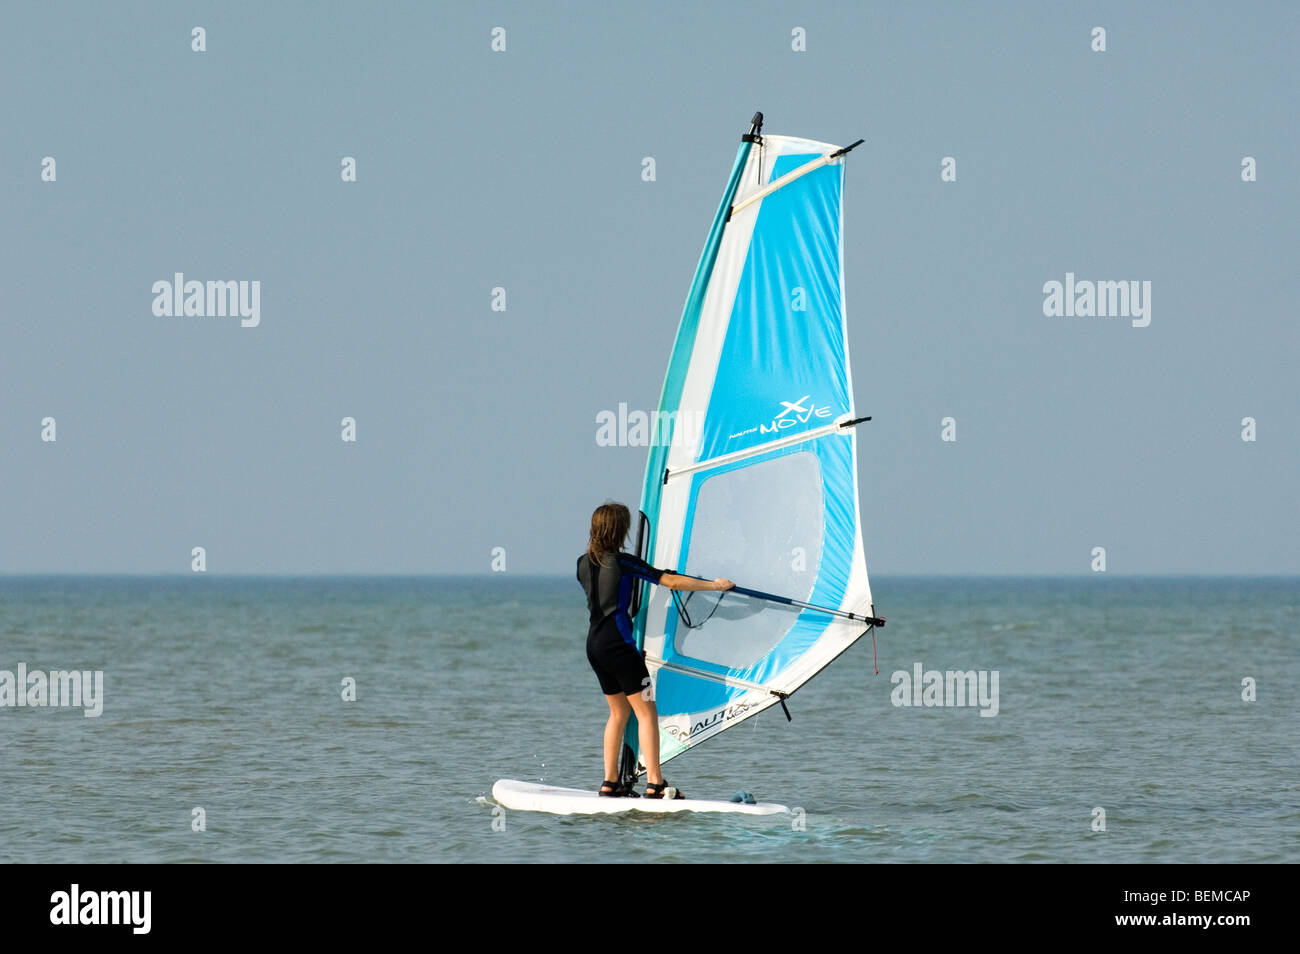 Young girl windsurfing along the North Sea coast Stock Photo